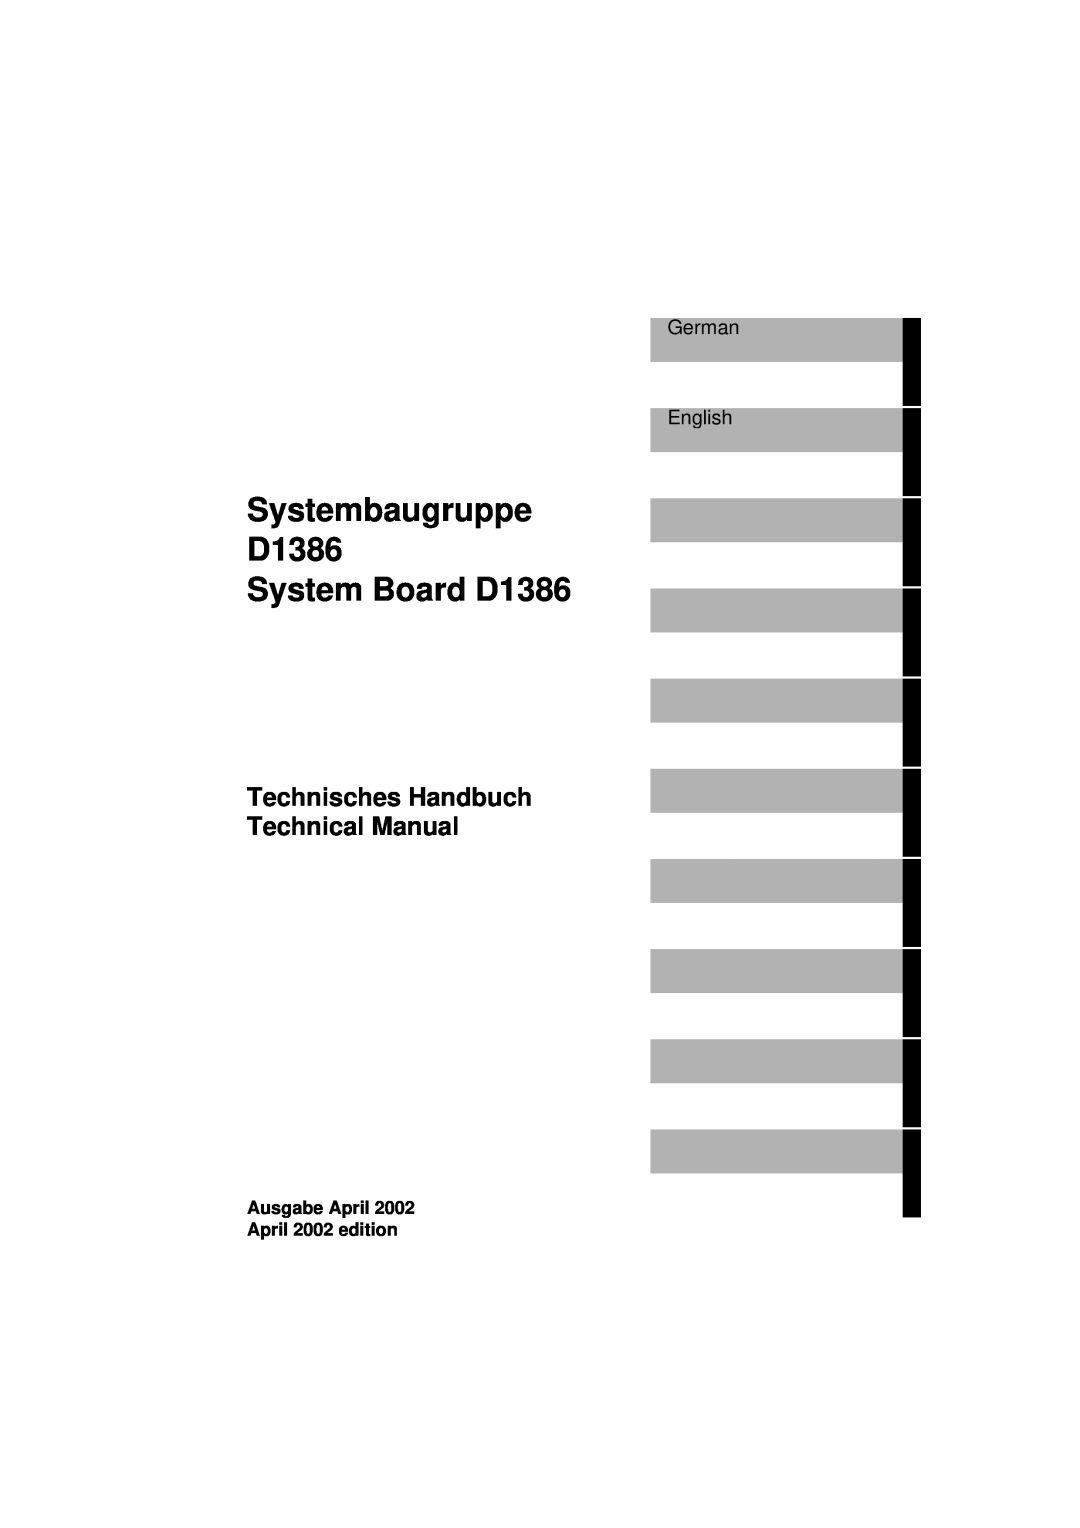 Fujitsu technical manual Systembaugruppe D1386 System Board D1386, Technisches Handbuch Technical Manual, German English 